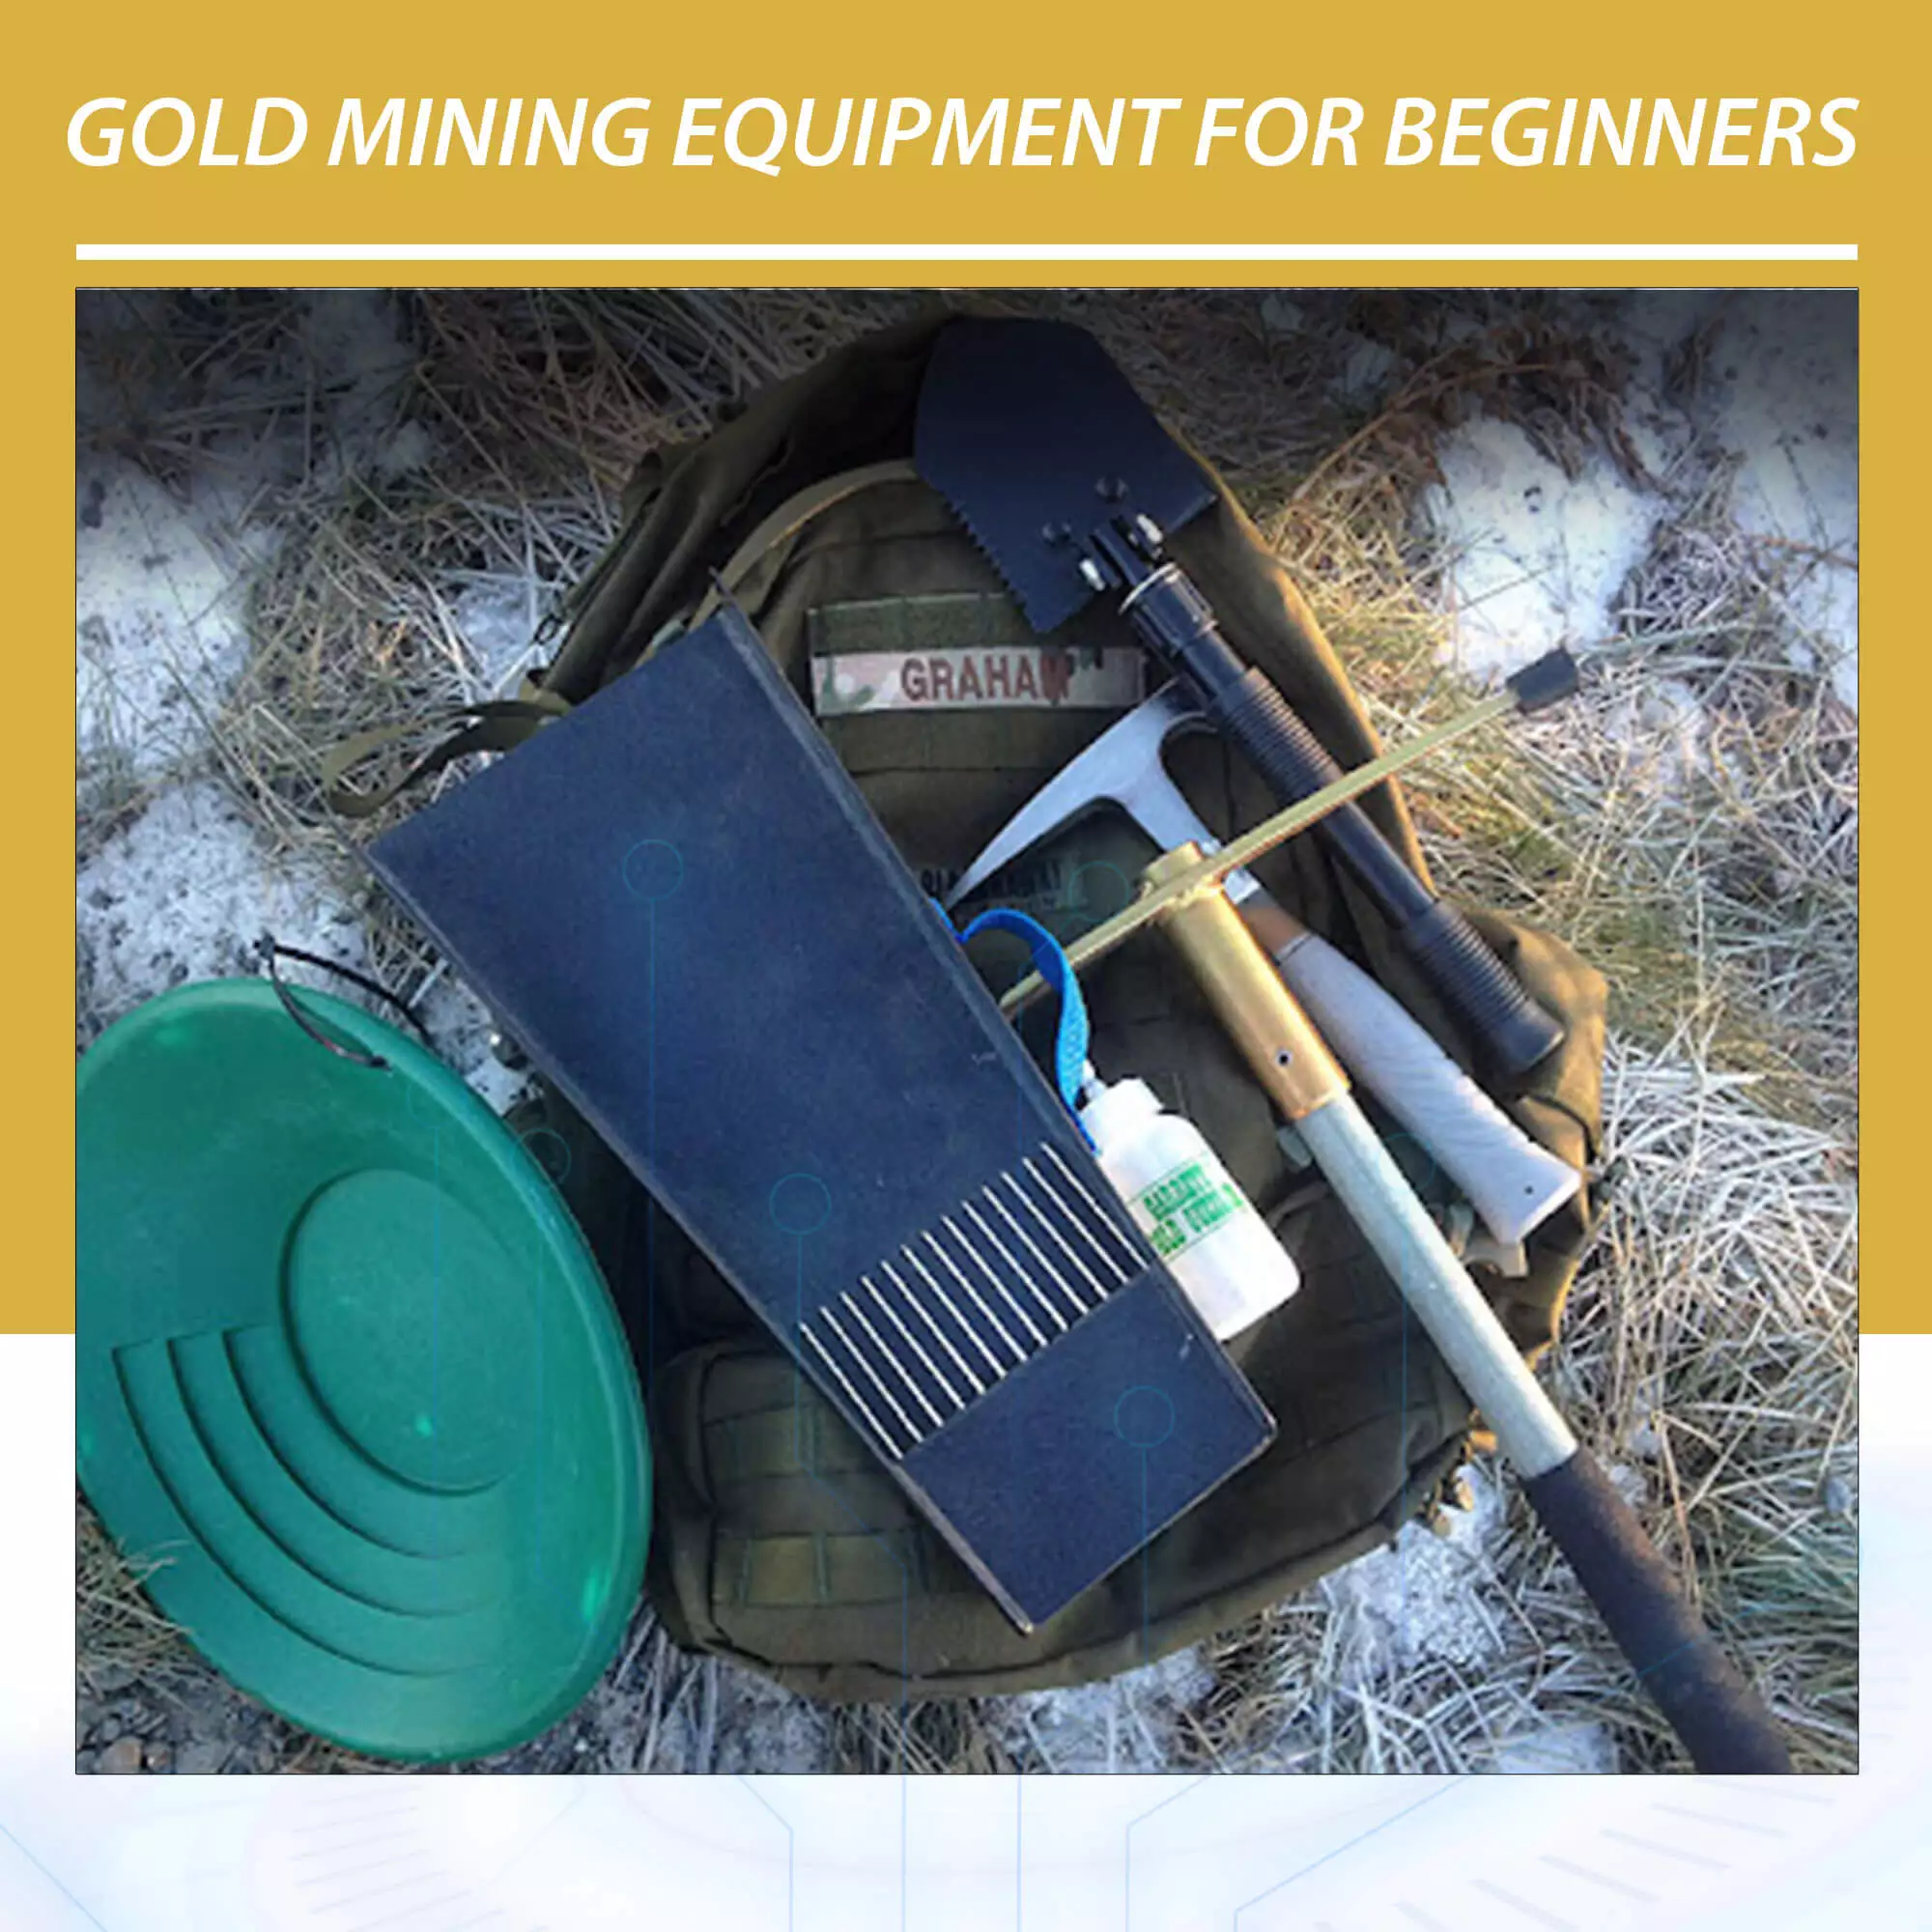 Gold mining equipment for beginners